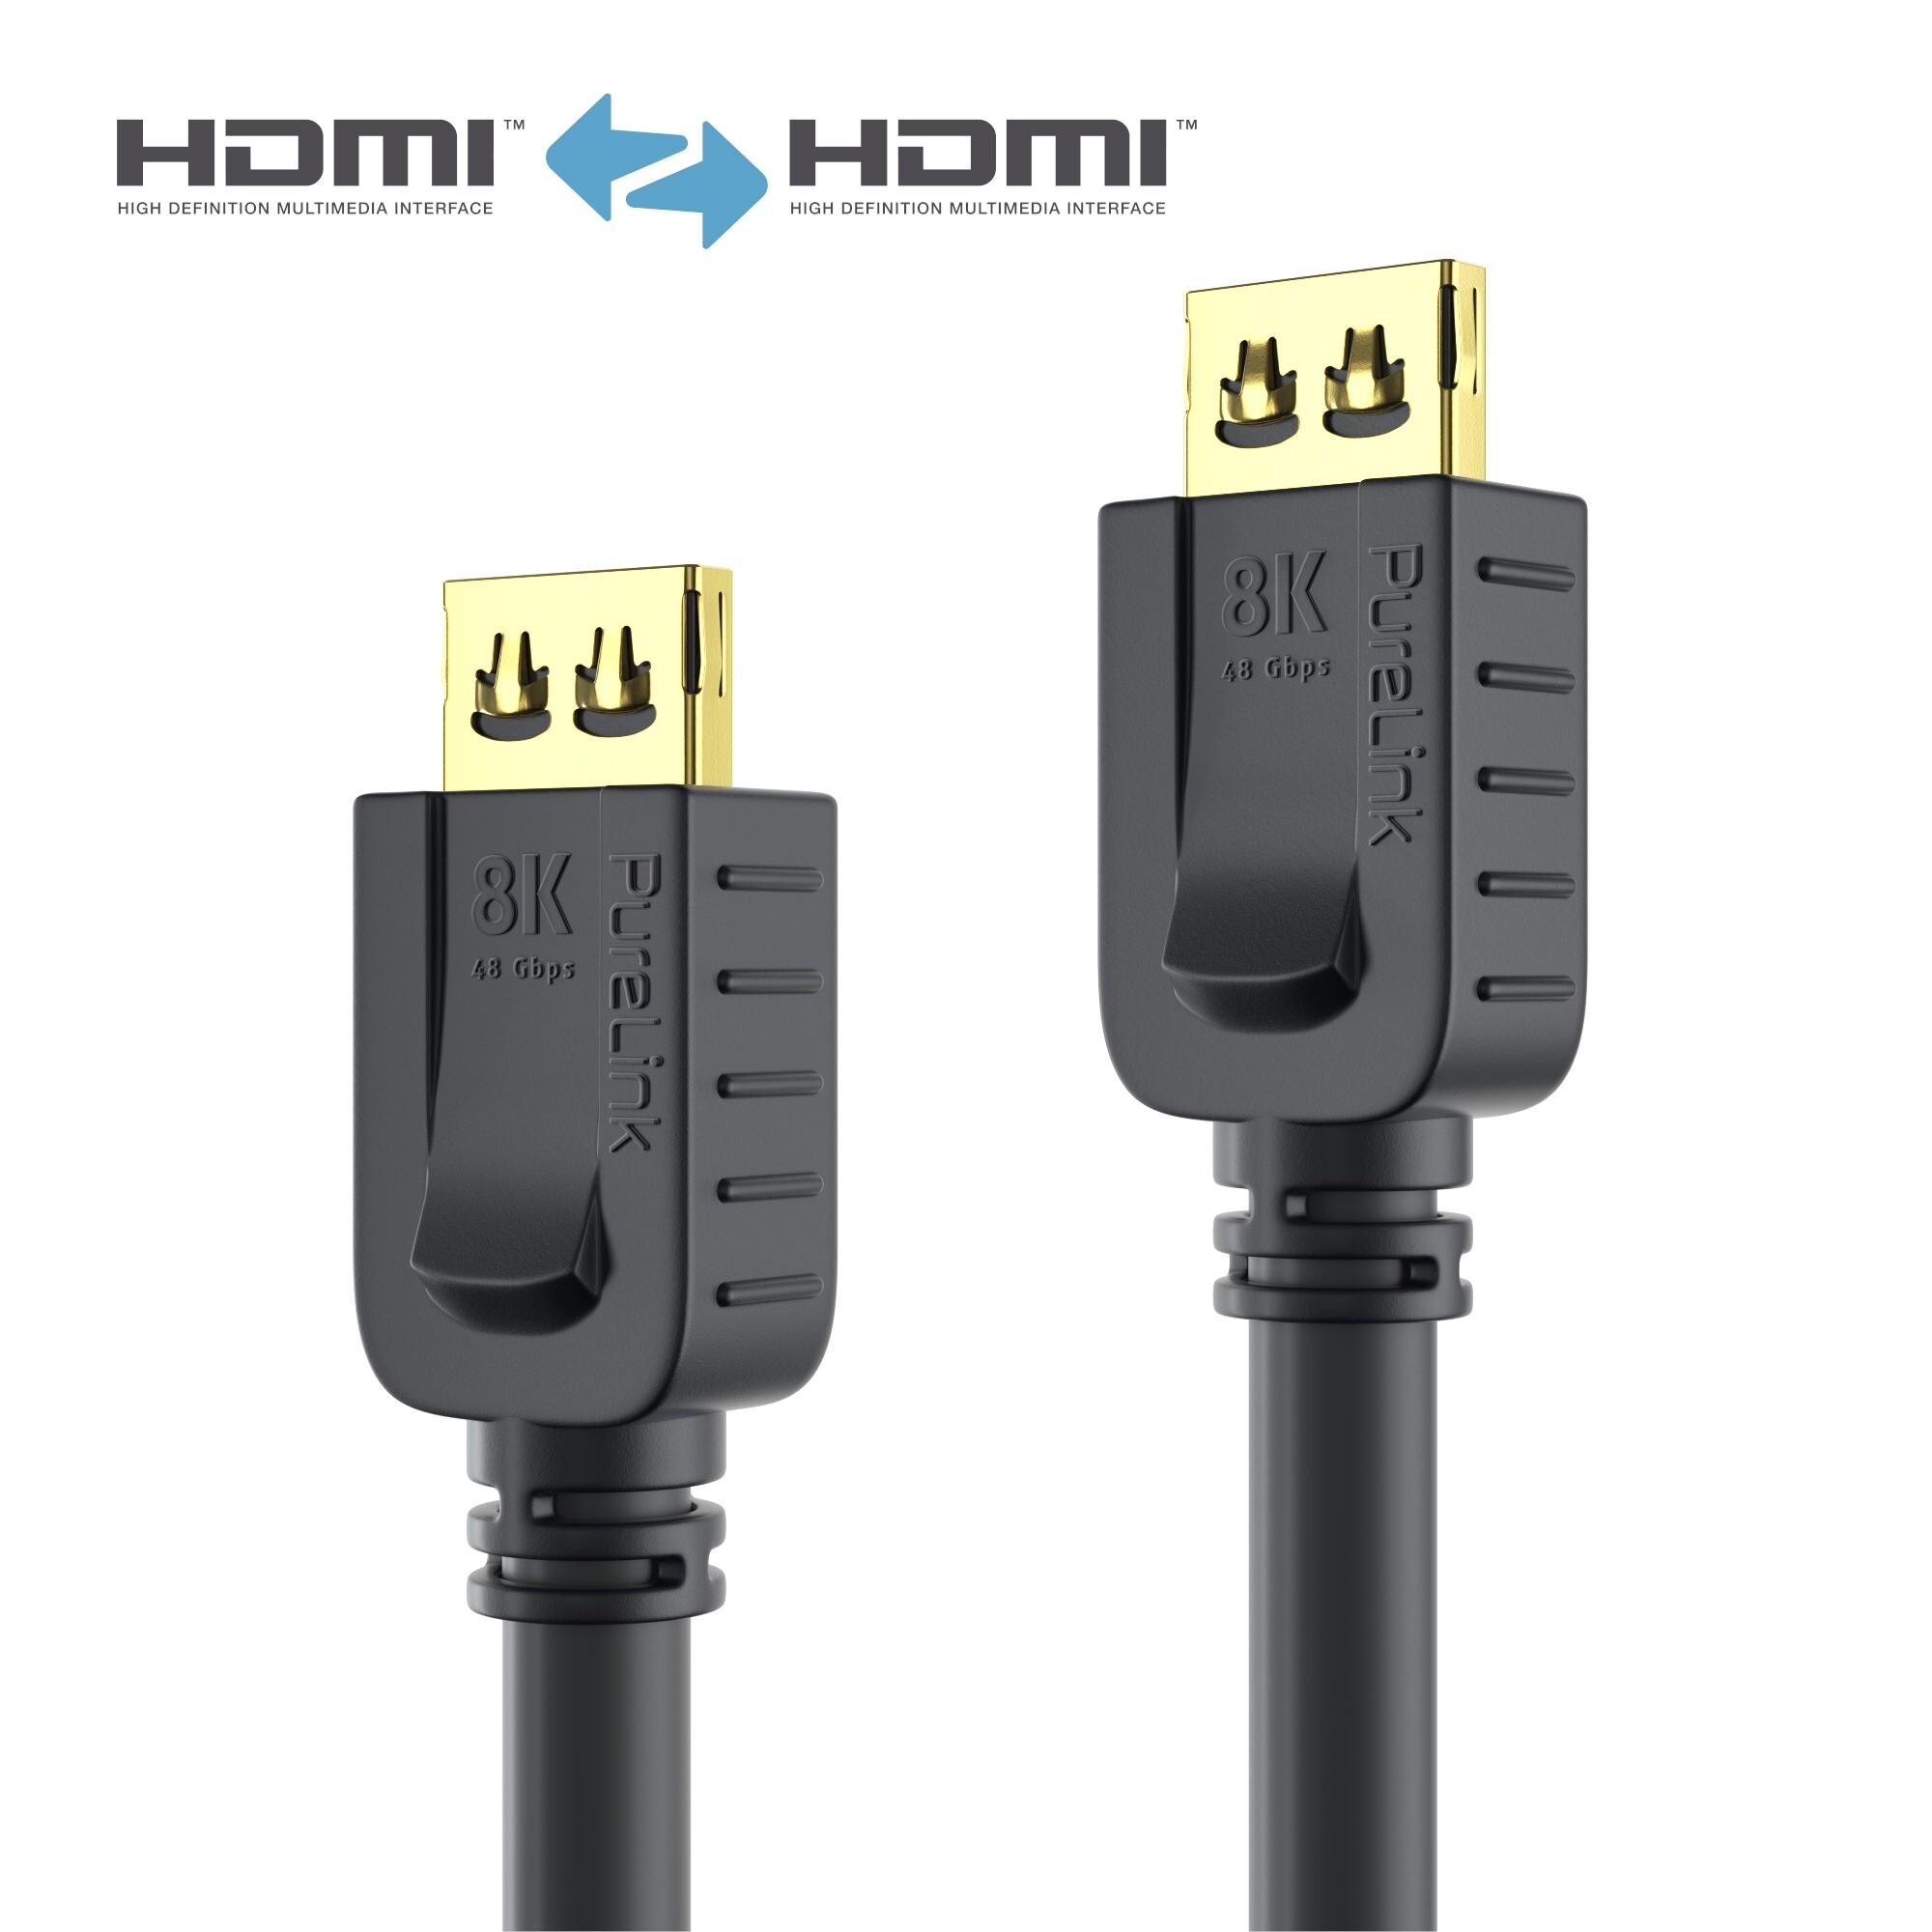 Purelink-PI1010-005-HDMI-2-1-8K-Kabel-0-5m-schwarz